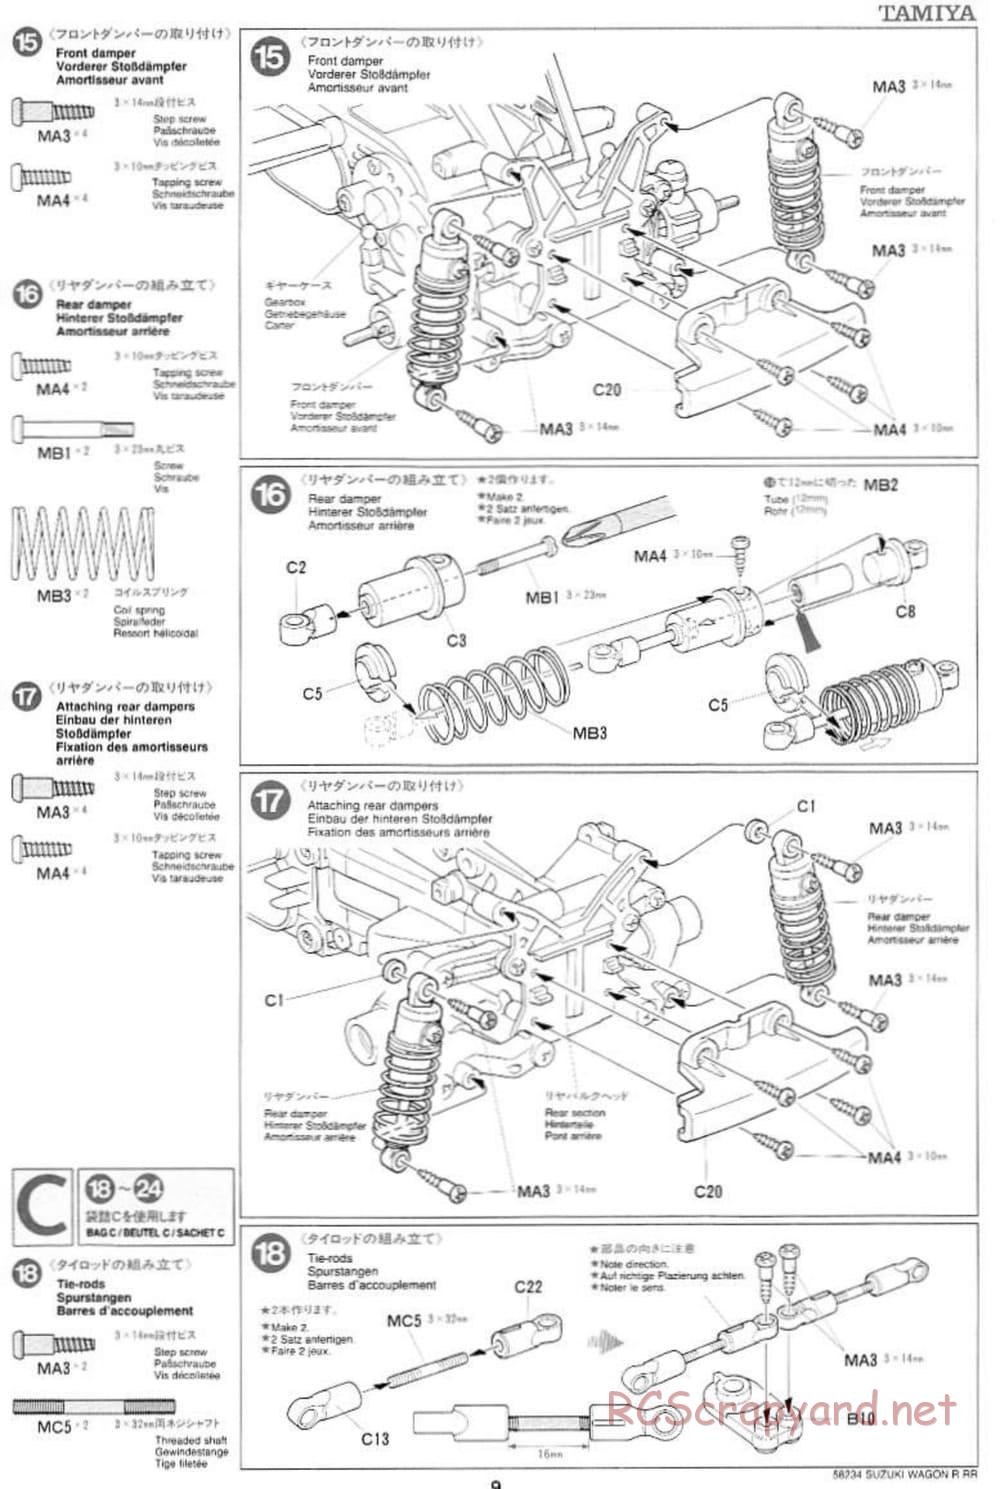 Tamiya - Suzuki WagonR-RR - M03 Chassis - Manual - Page 9